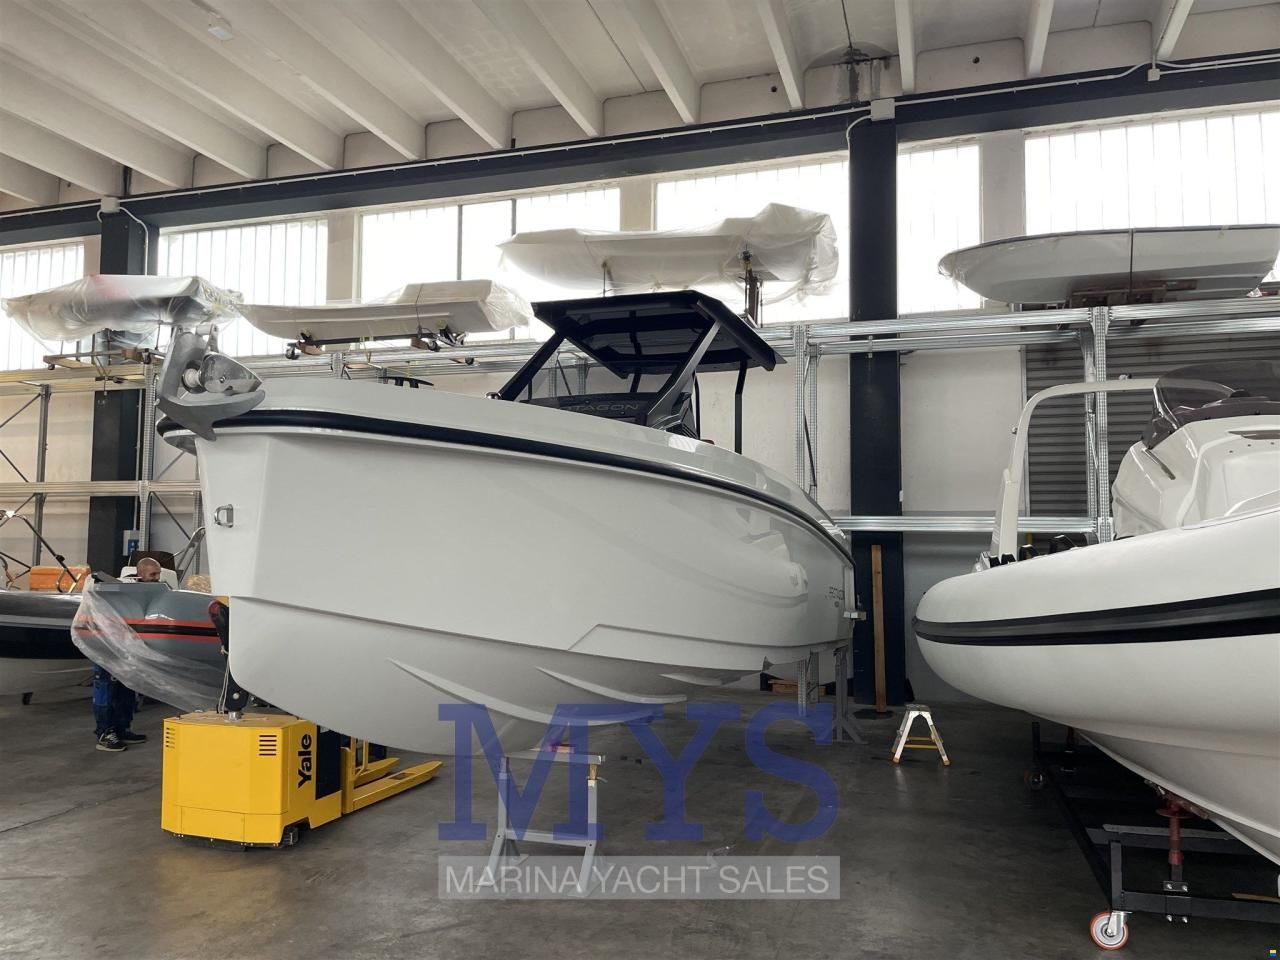 Protagon 25 Motorboot + Yamaha 300PS bei Seaside Boote kaufen